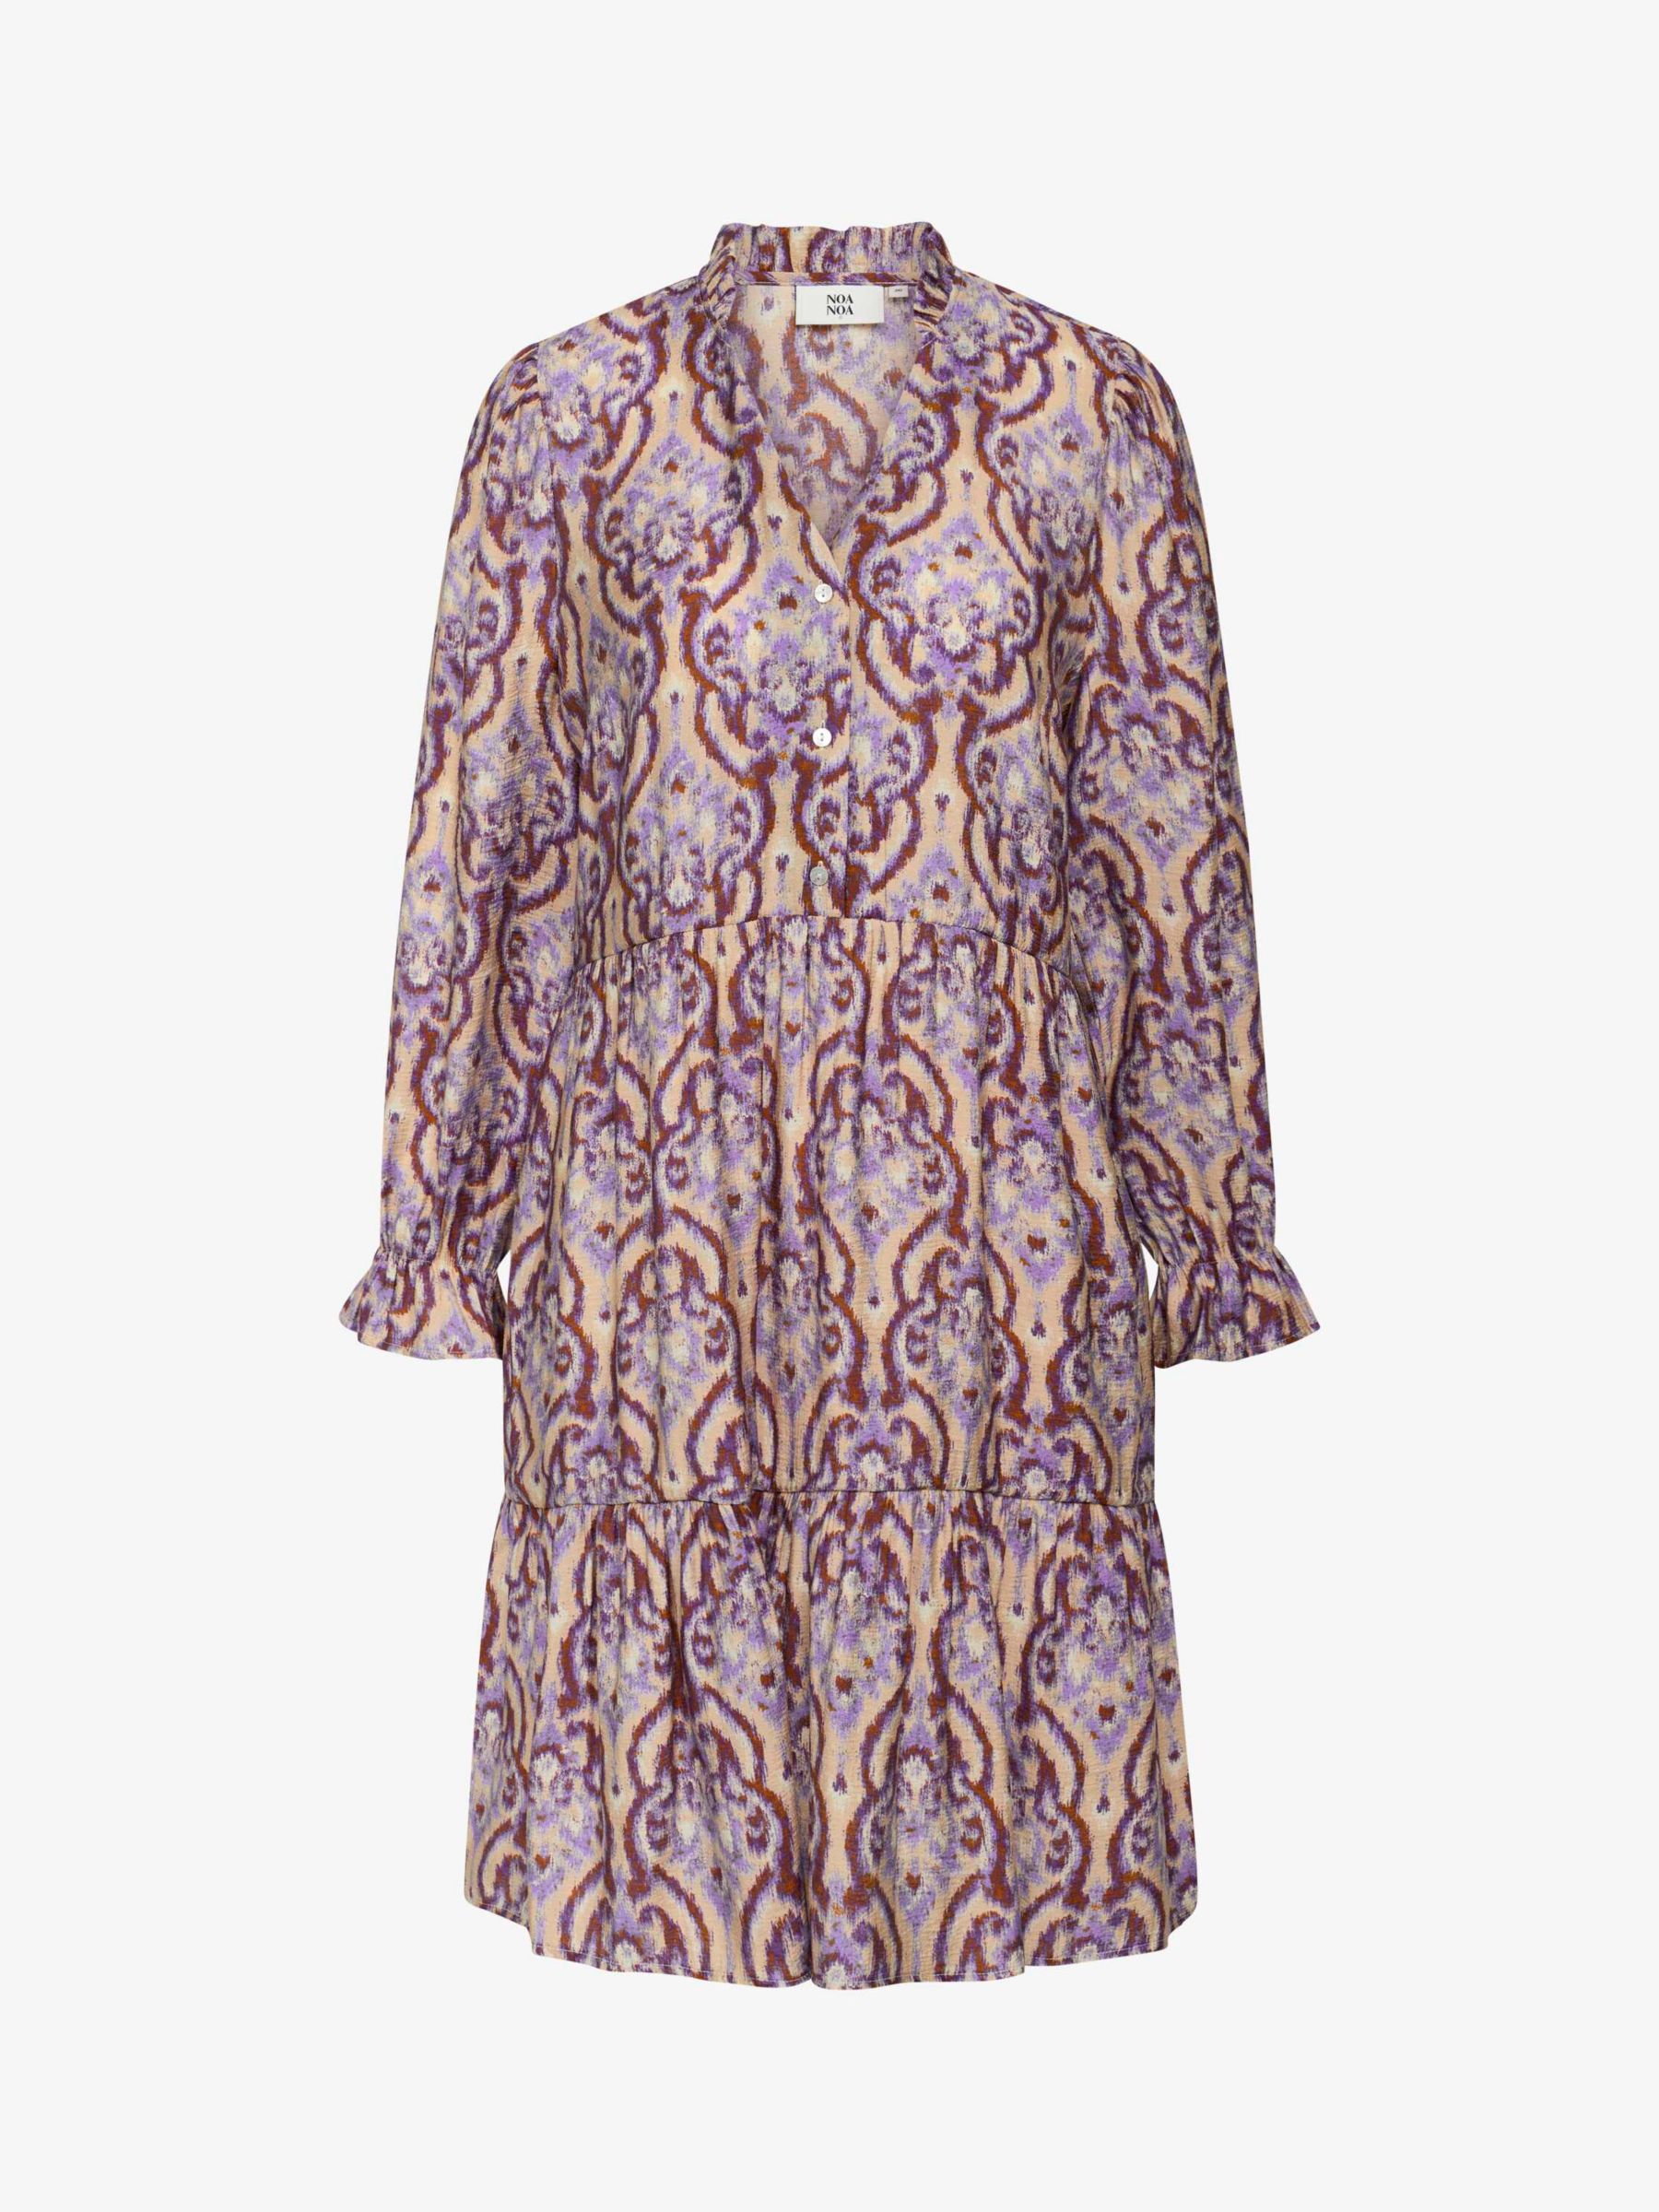 Noa Noa Mirabel Abstract Print Dress, Purple/Beige, 14